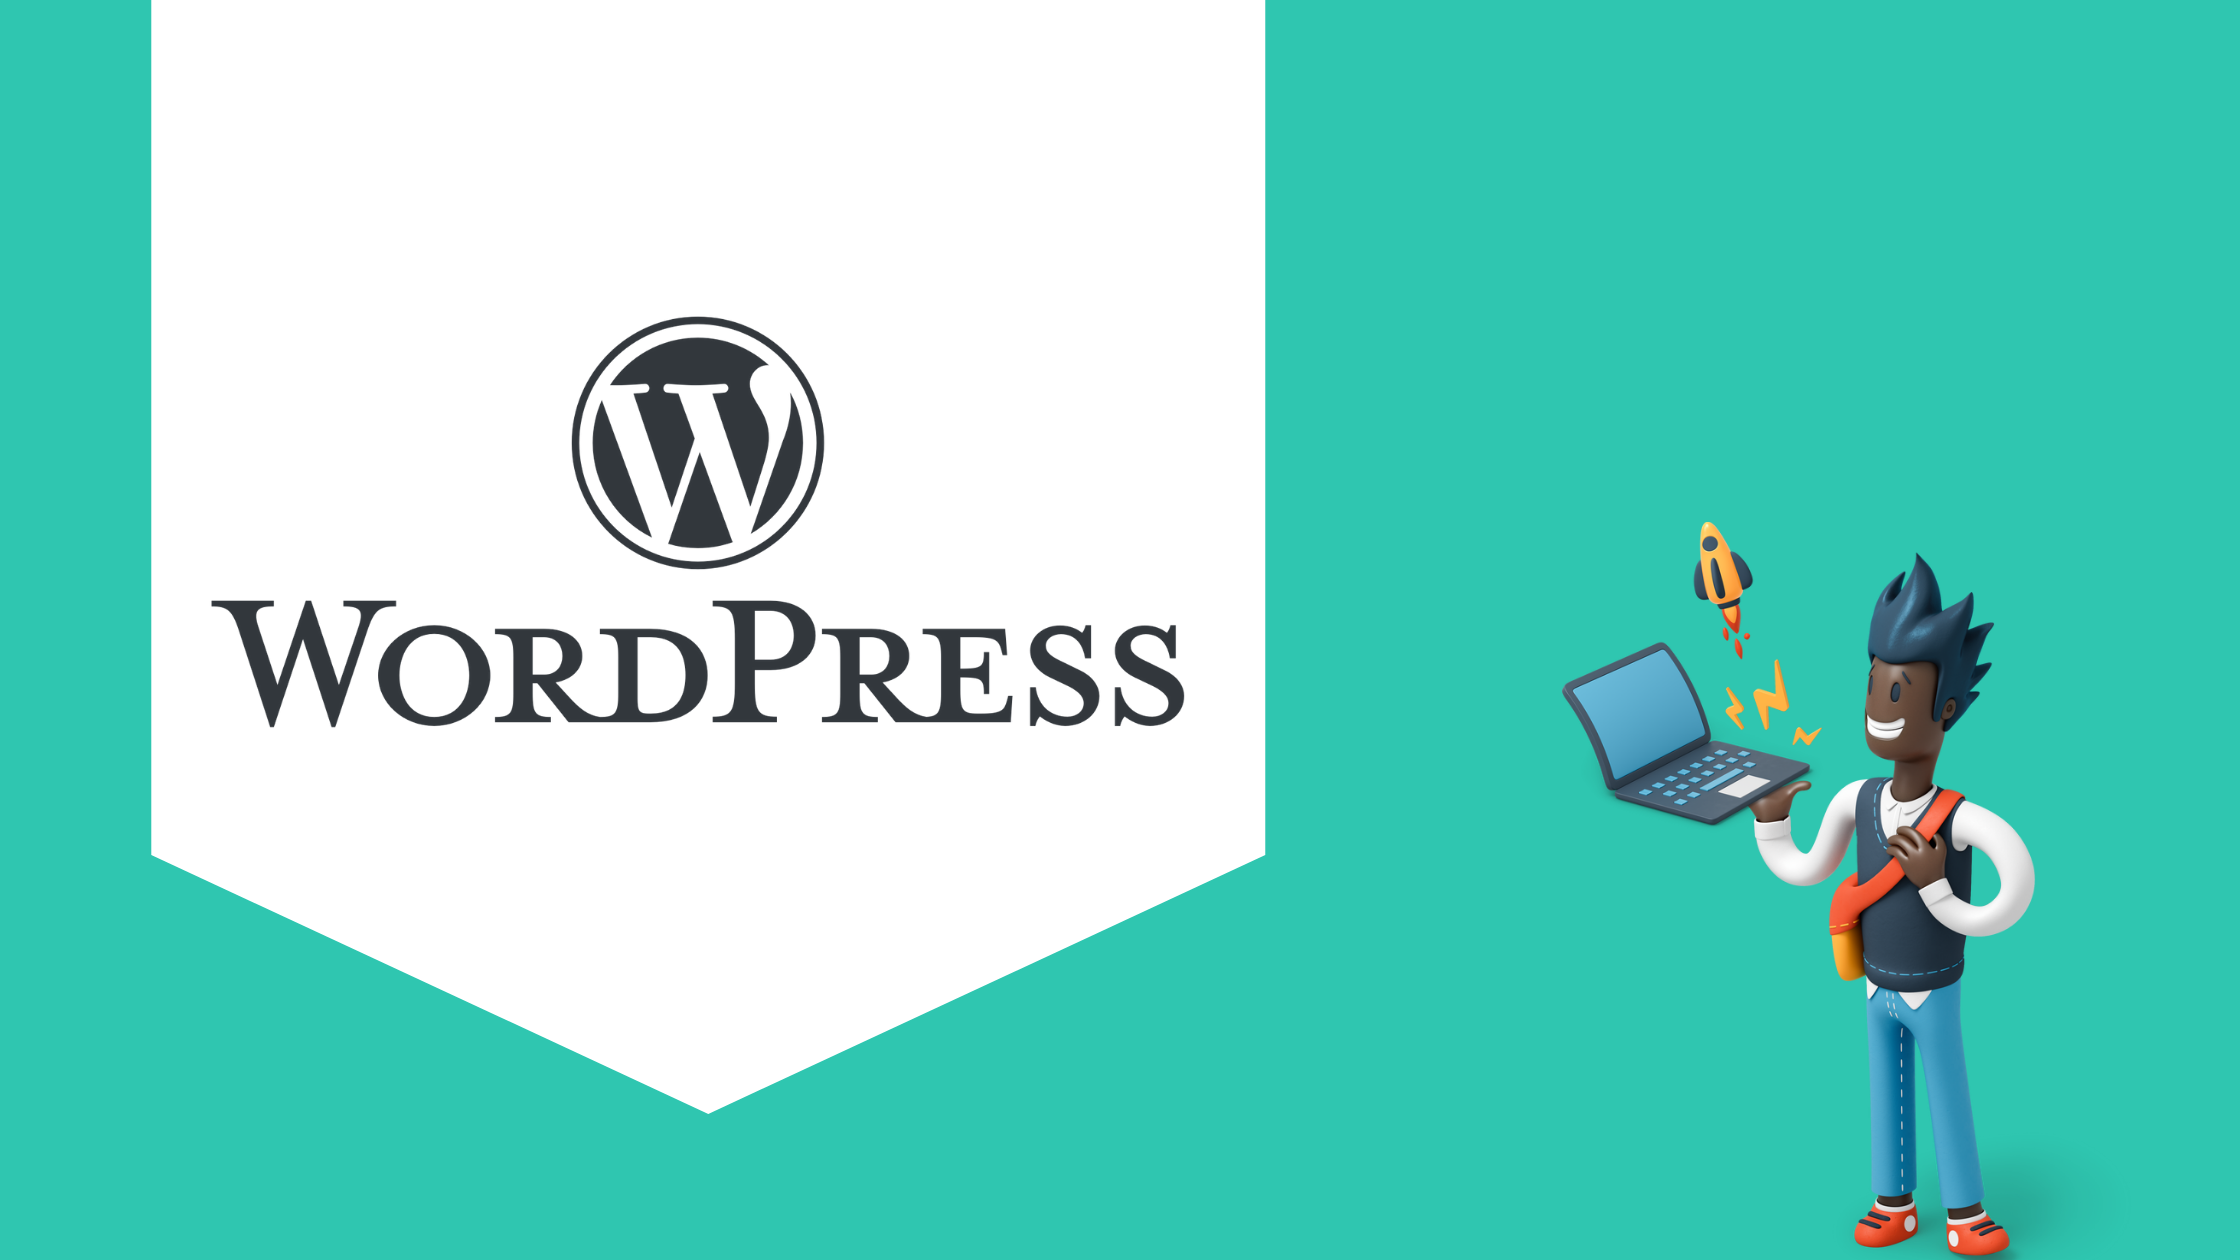 Web Design With WordPress